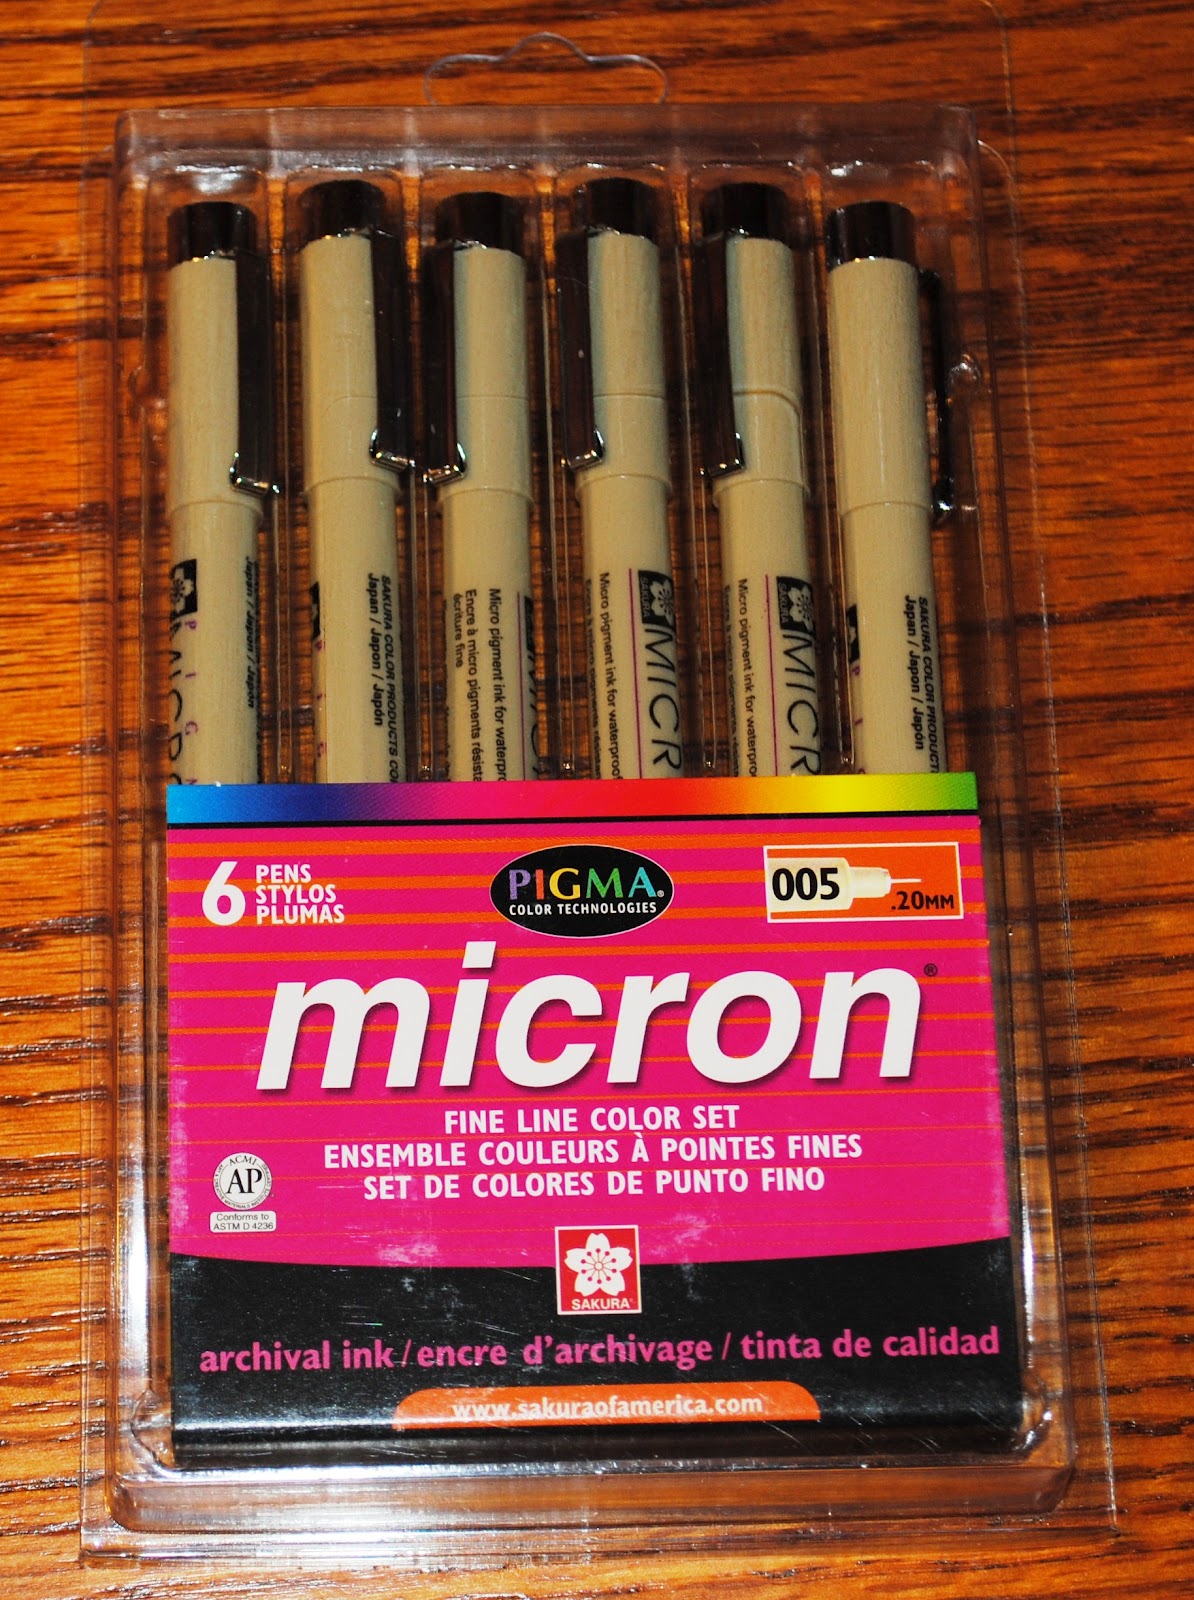 Sakura Pigma Micron 005 Pen 0.20mm Brown